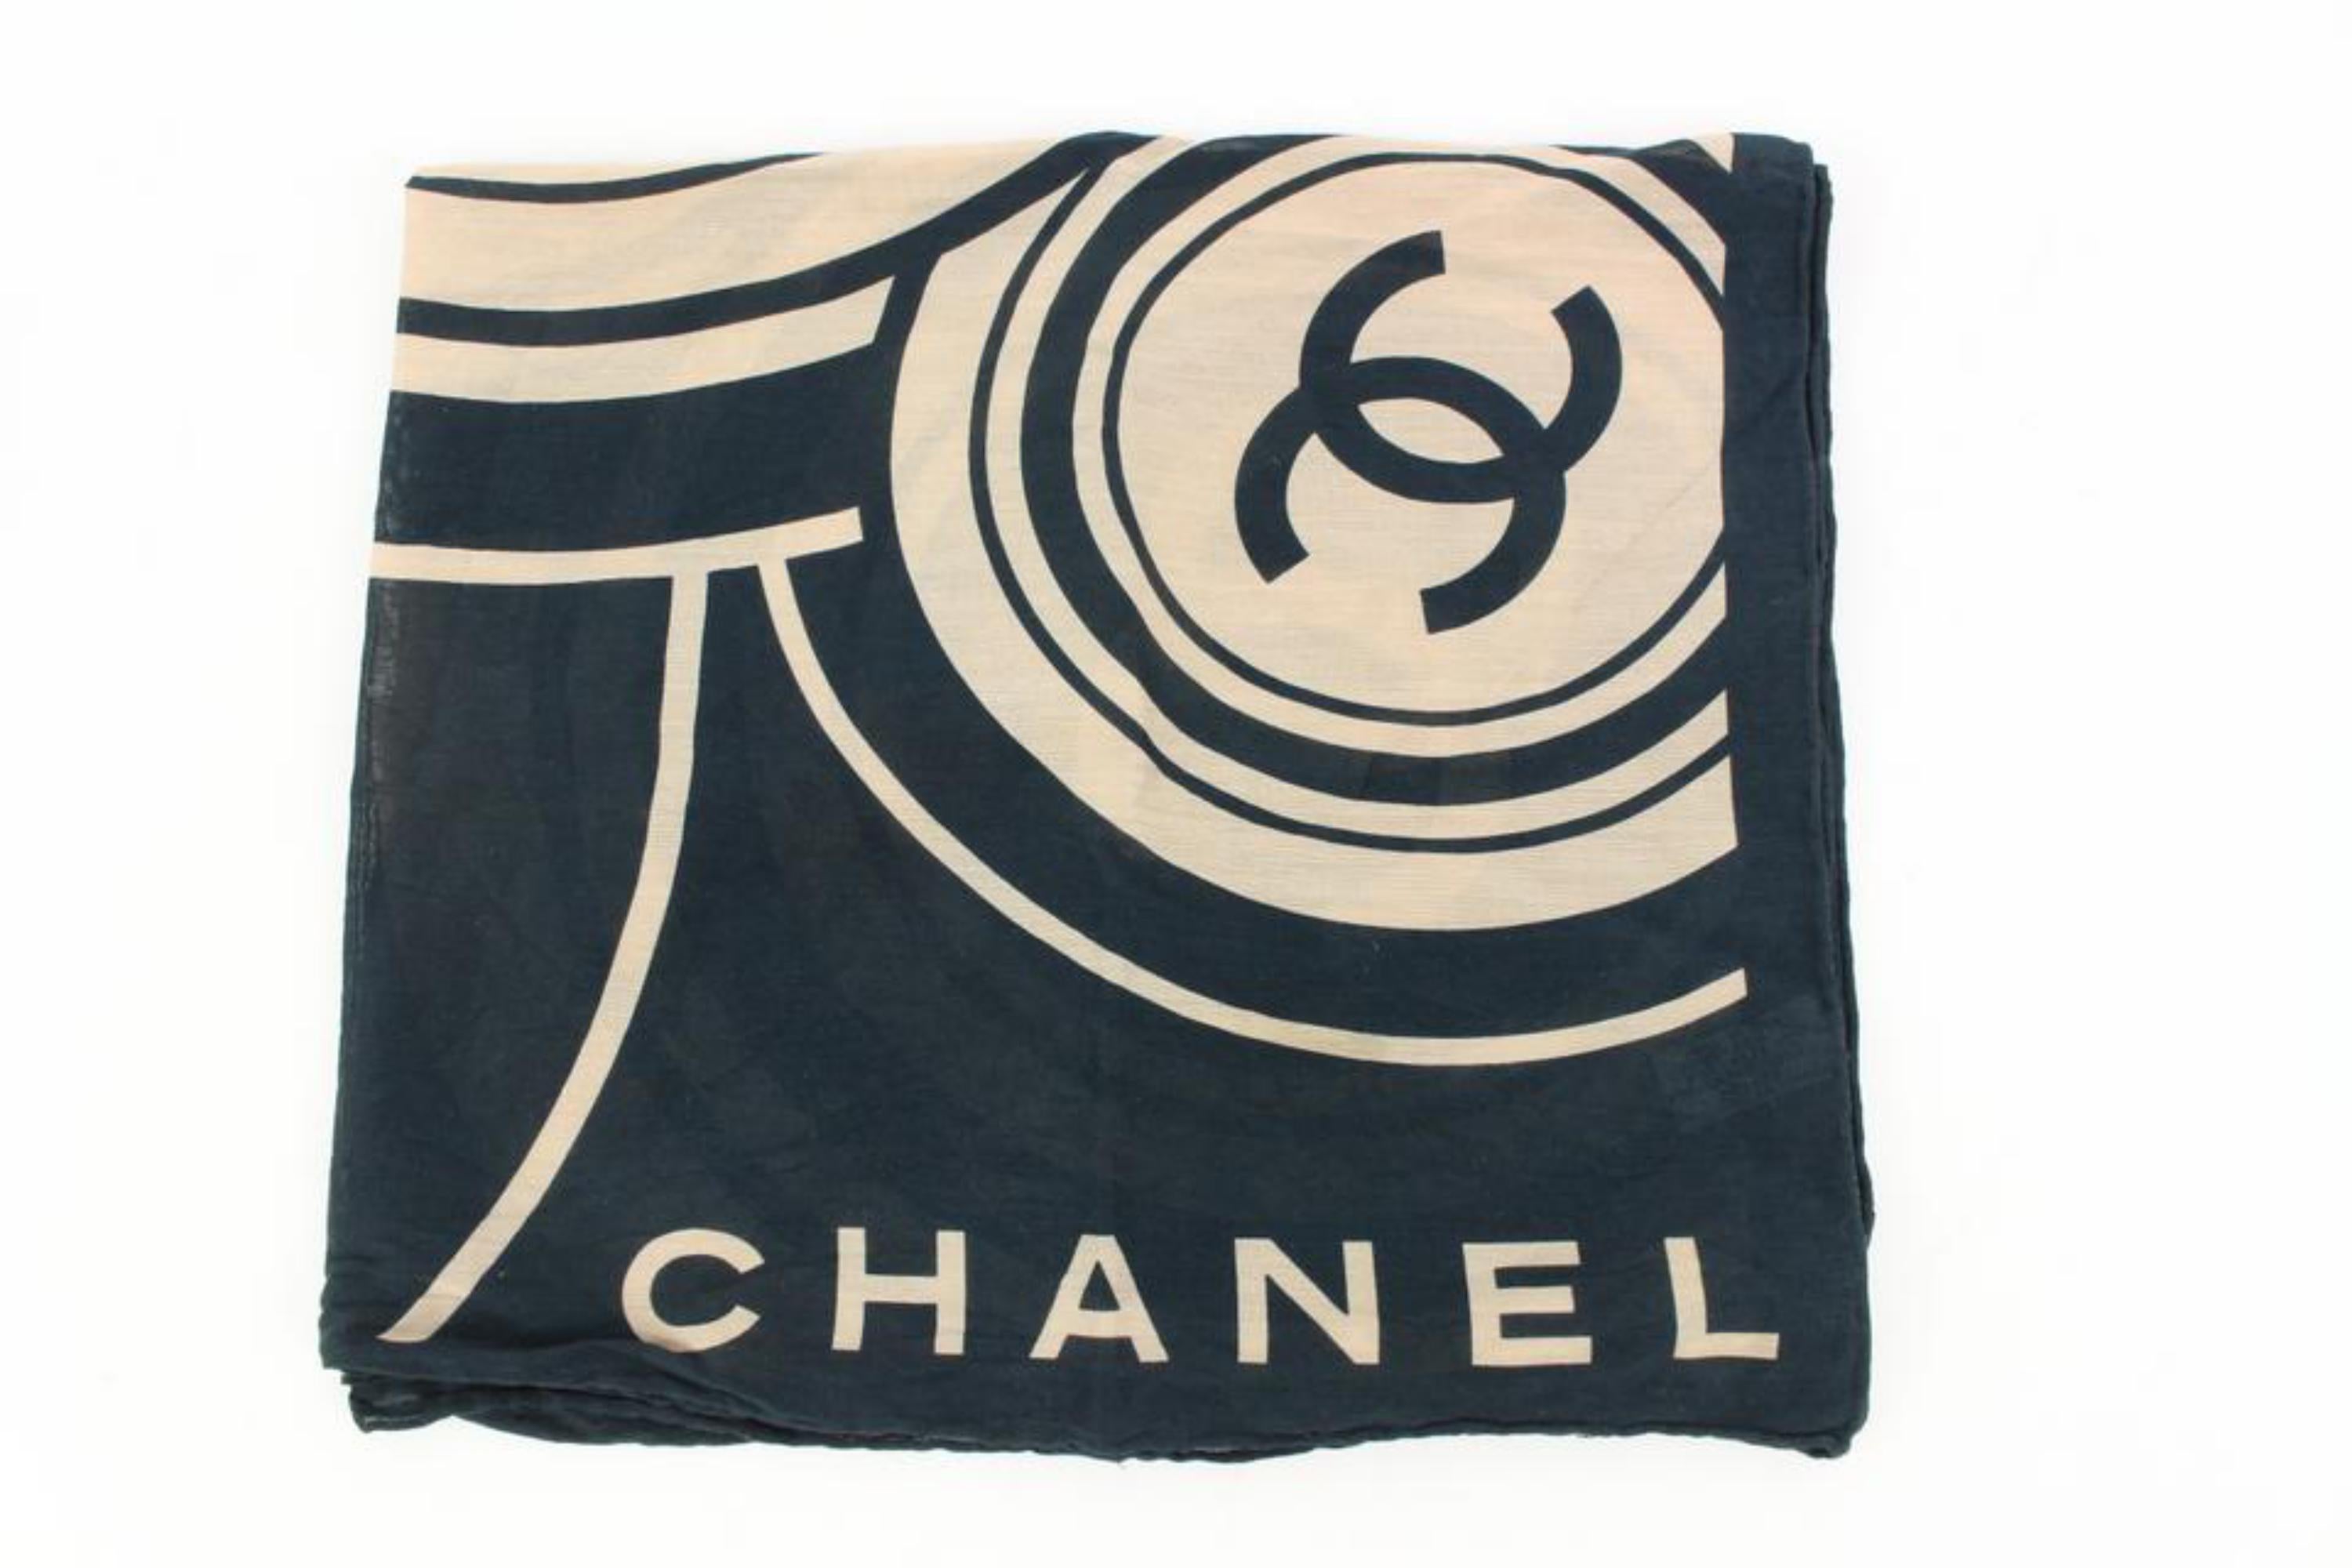 Chanel Black x Beige CC Cotton Scarf 56ck38s 2